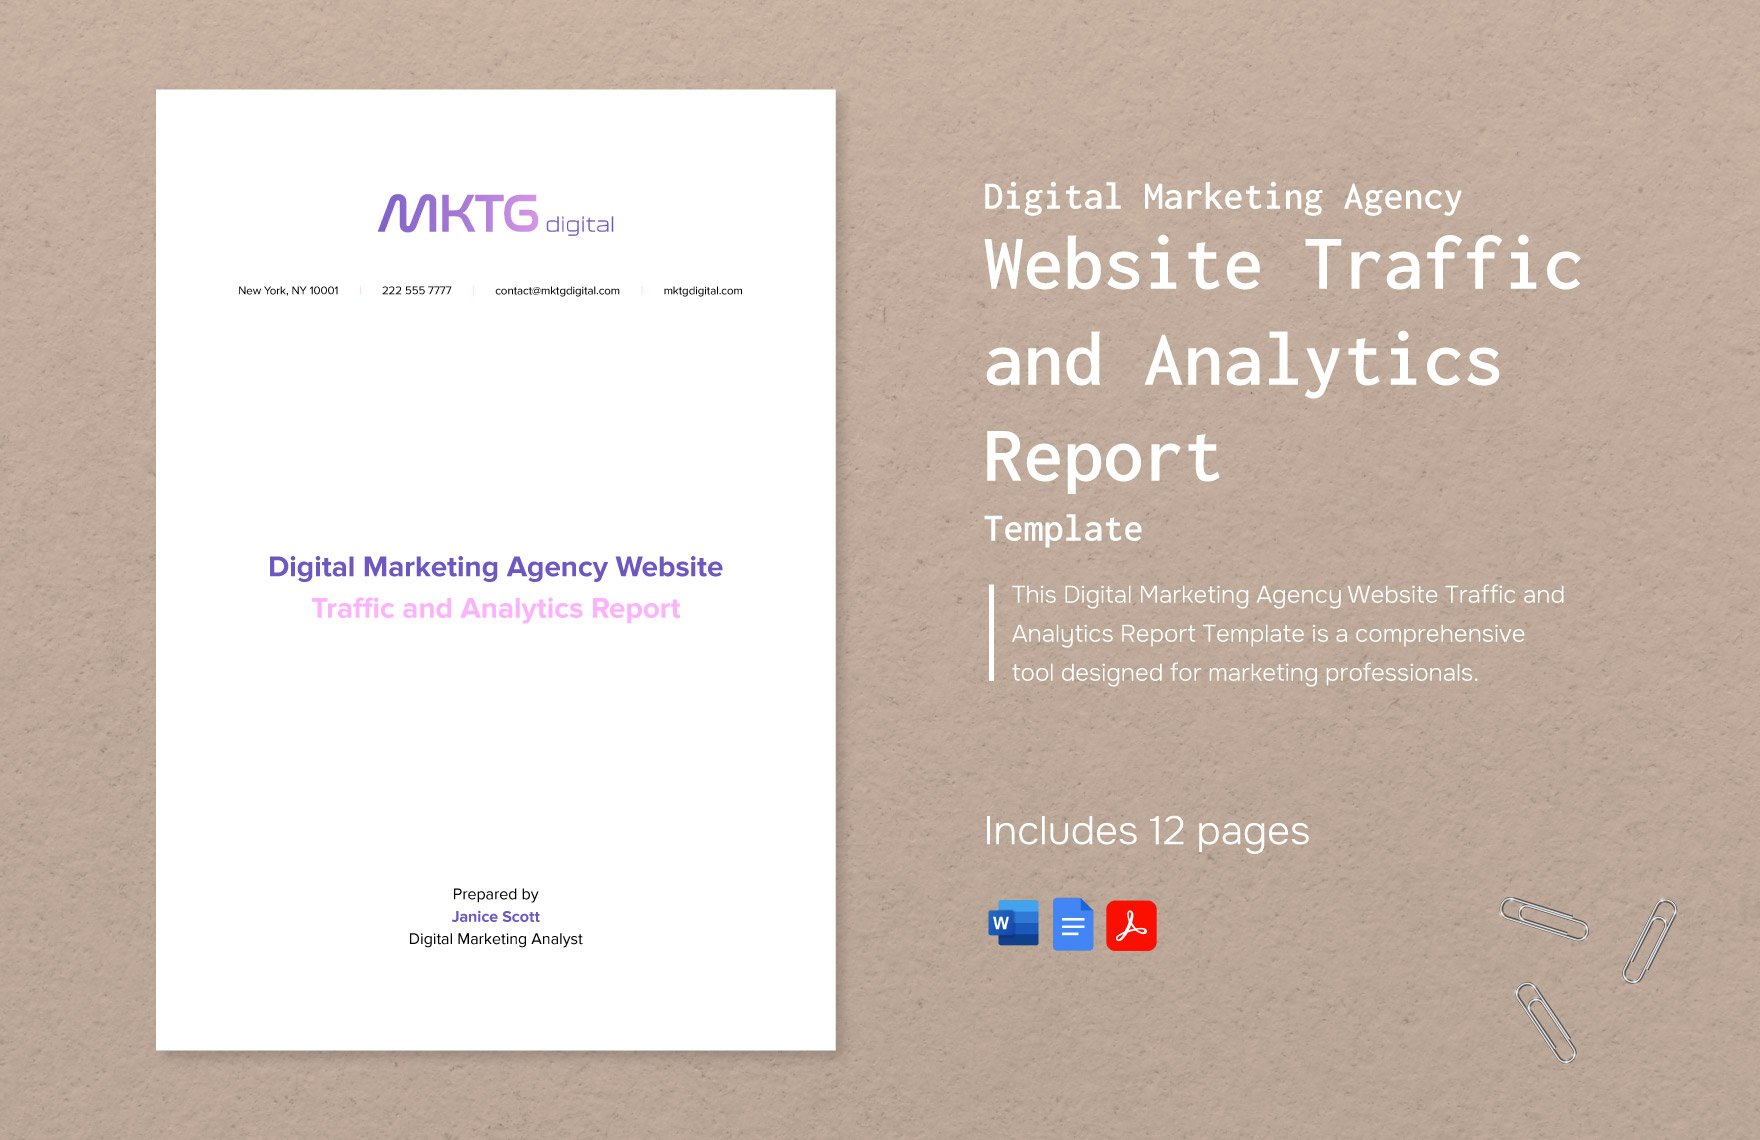 Digital Marketing Agency Website Traffic and Analytics Report Template